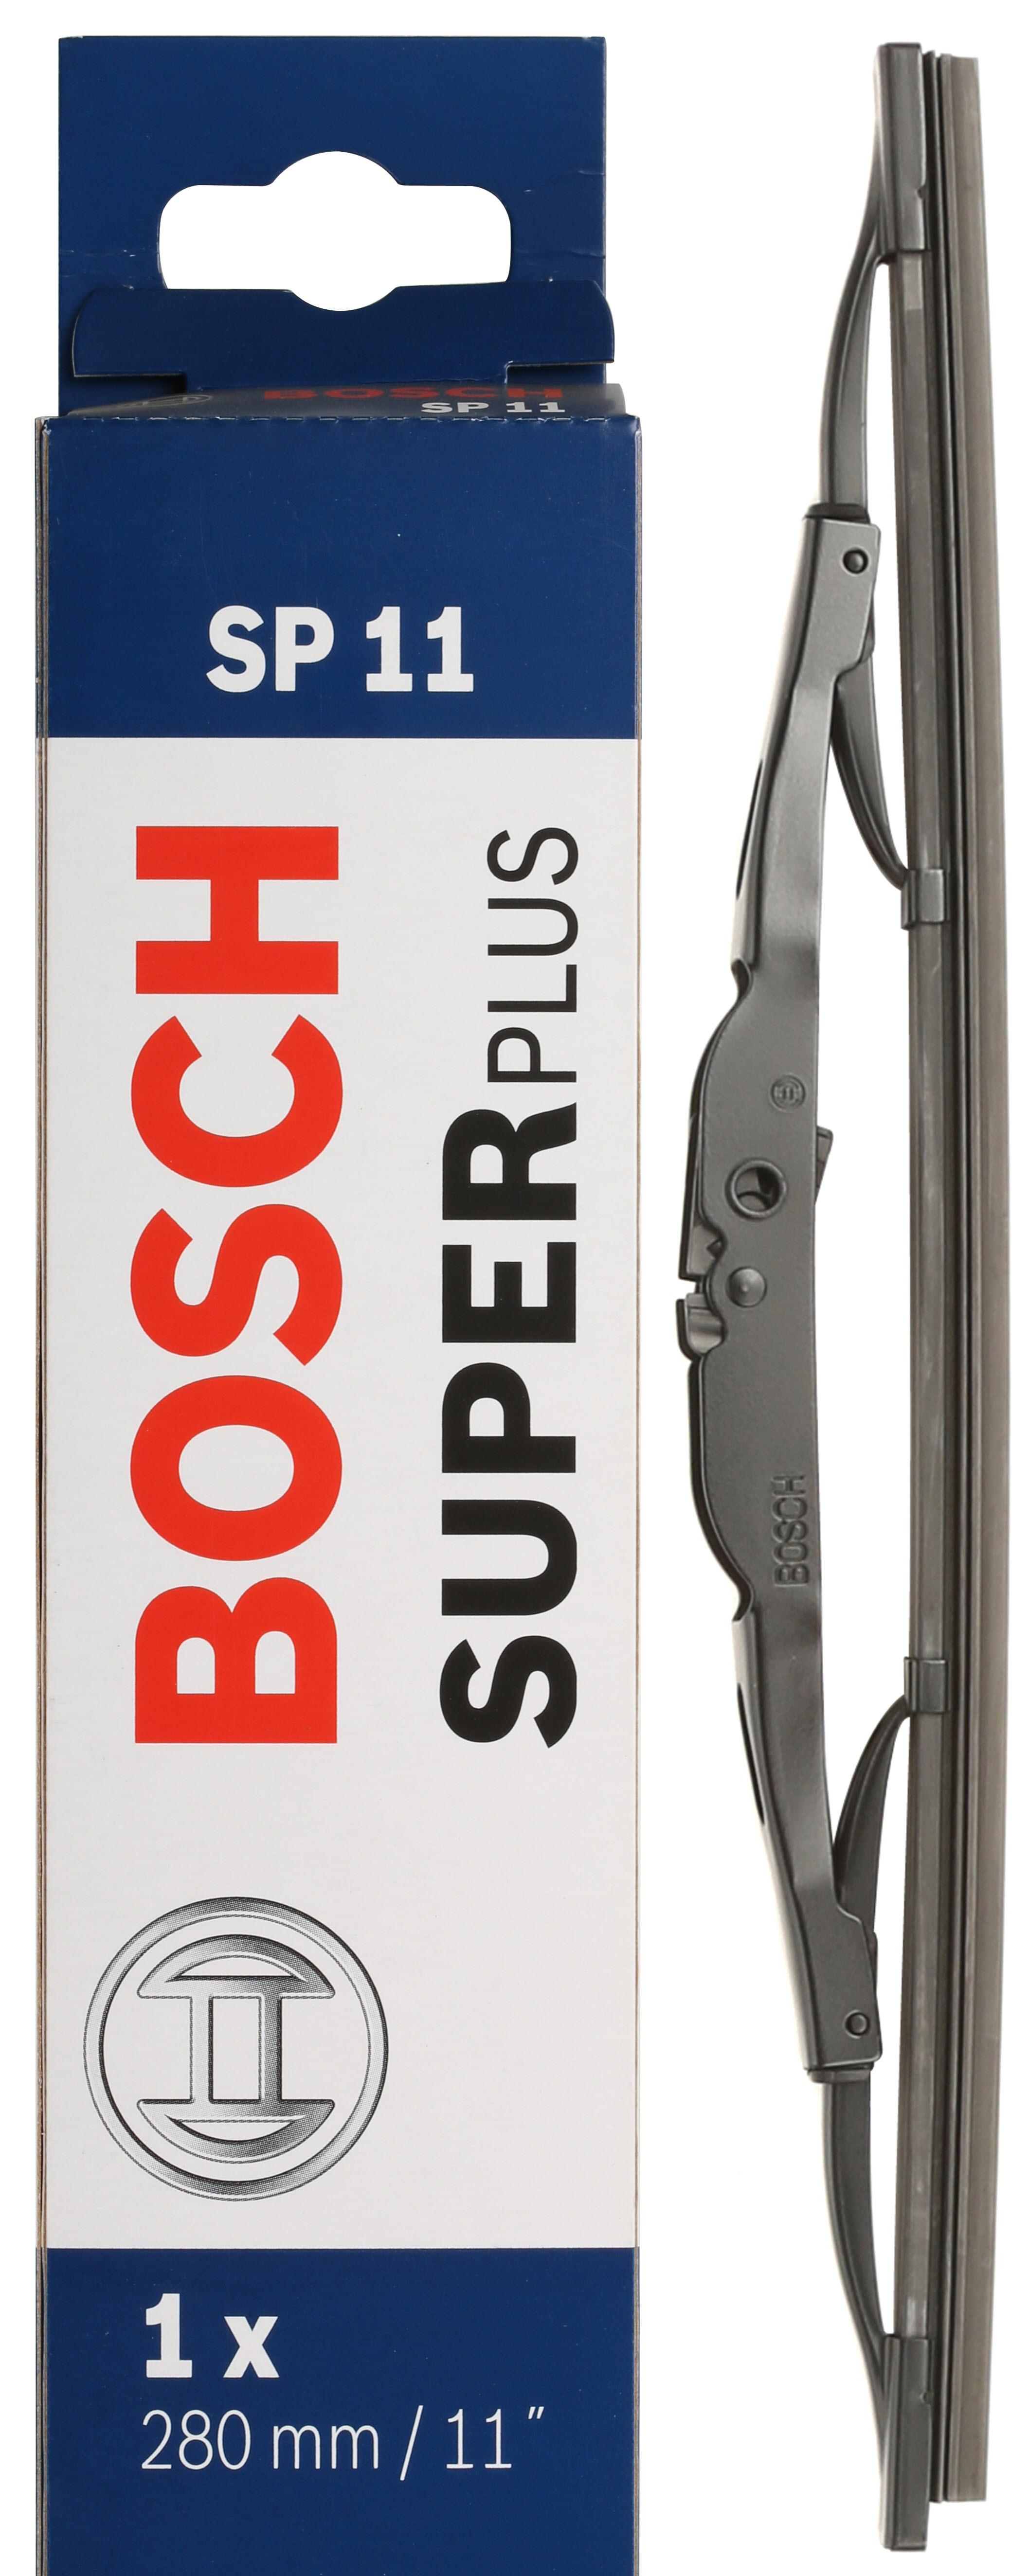 Bosch Sp11 Wiper Blade - Single